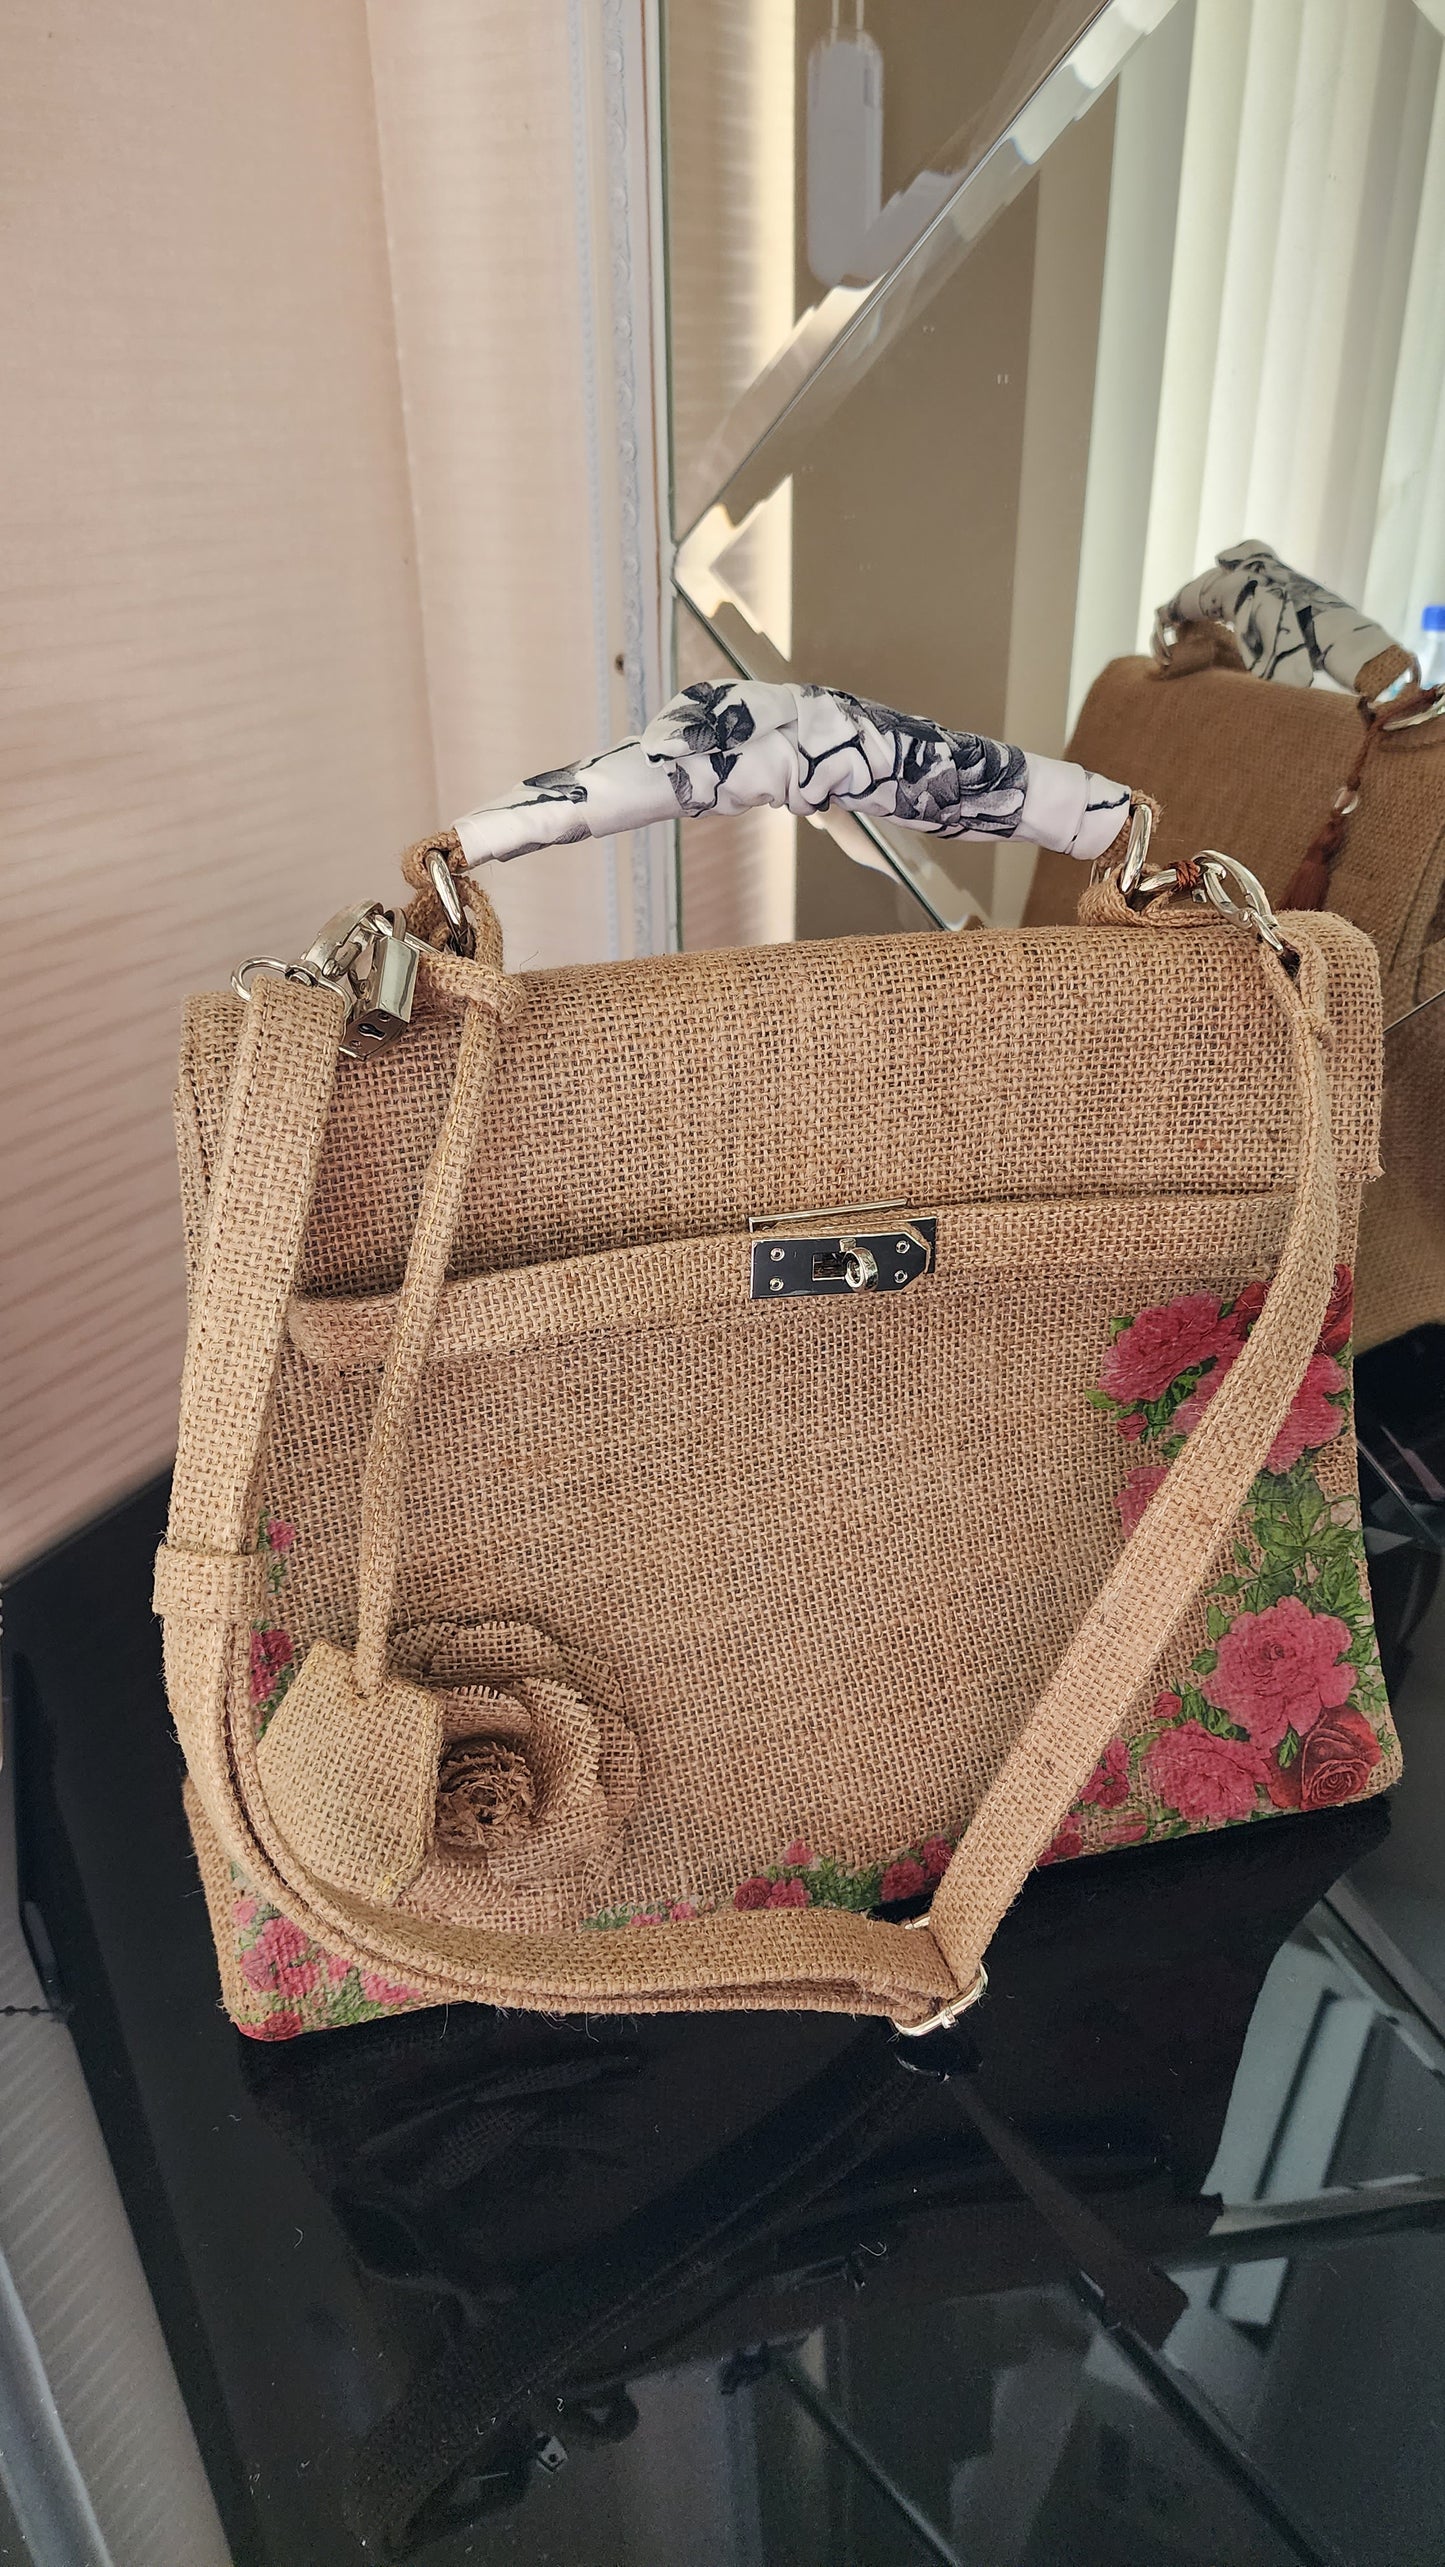 Victorian style - Handmade burlap / jute bag, Medium size (35cm)